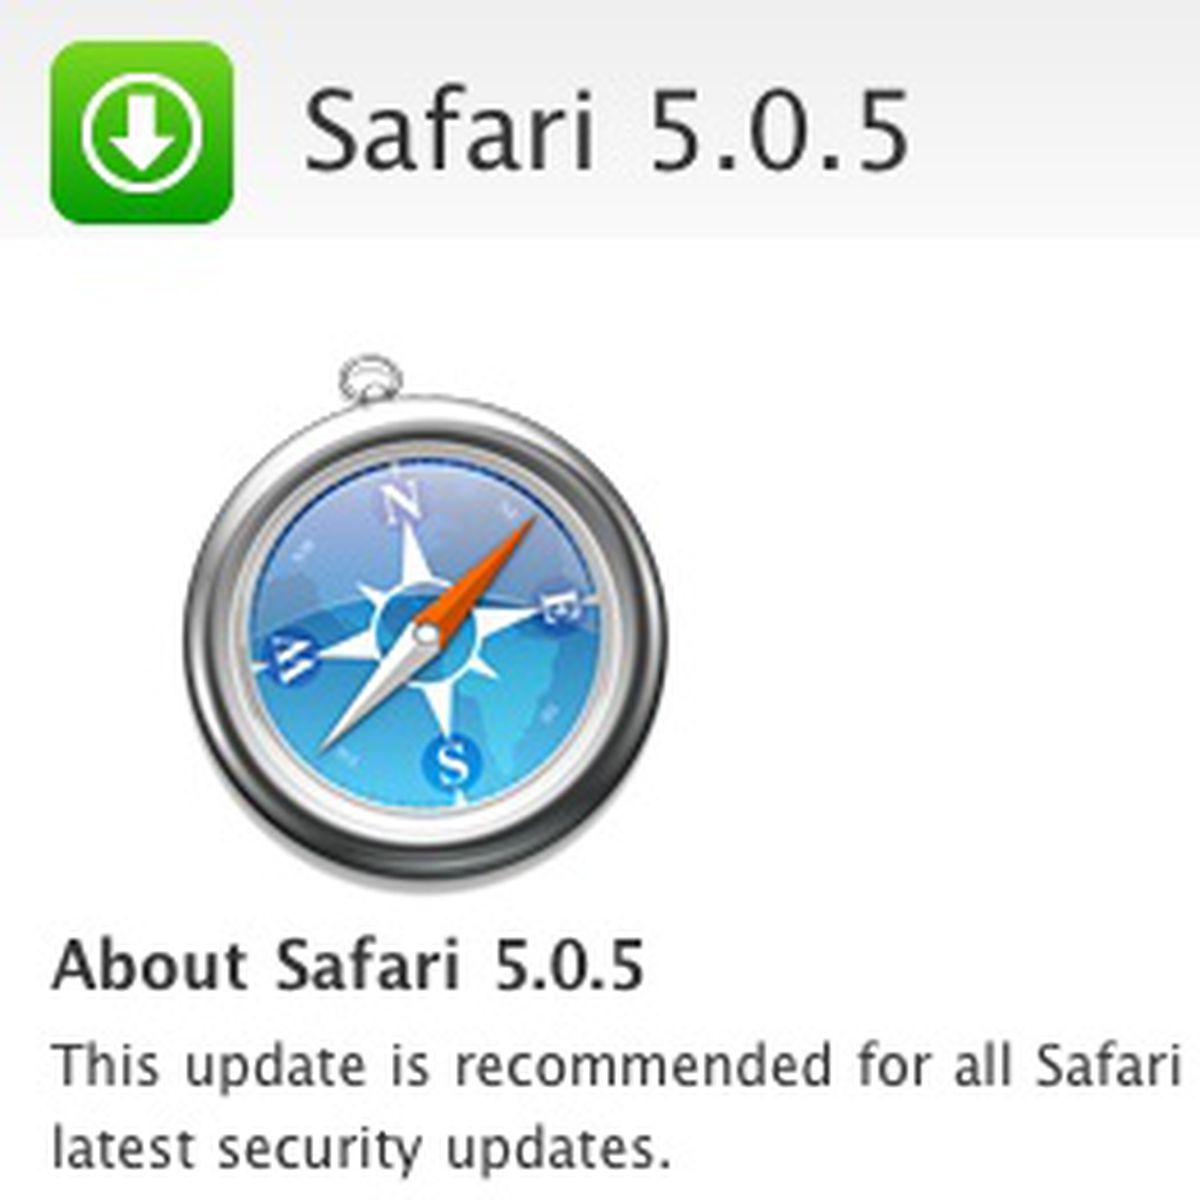 safari 5.0.6 update